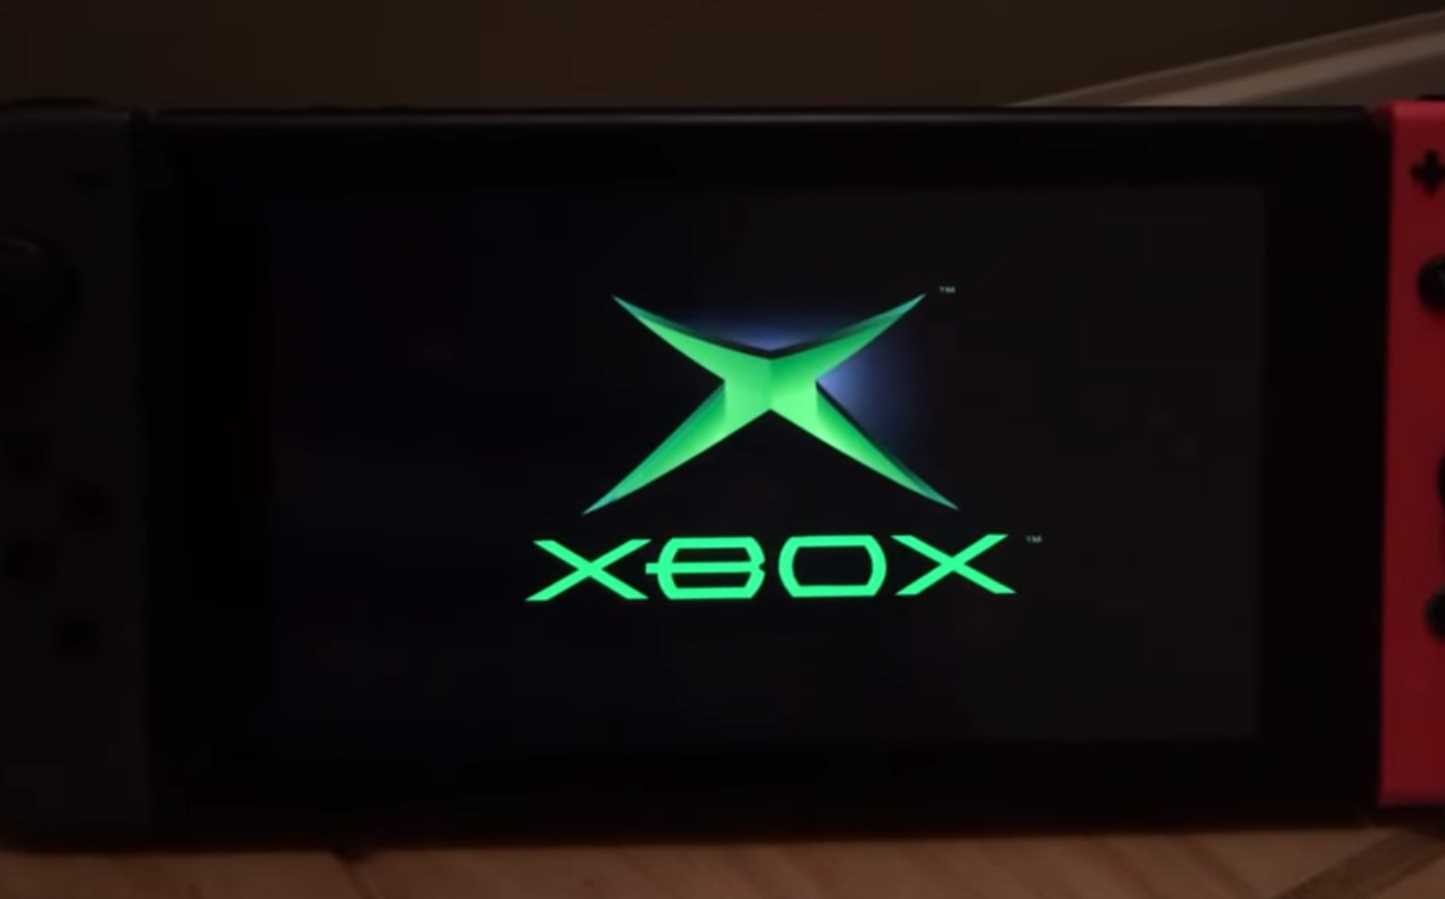 original xbox emulator on pc